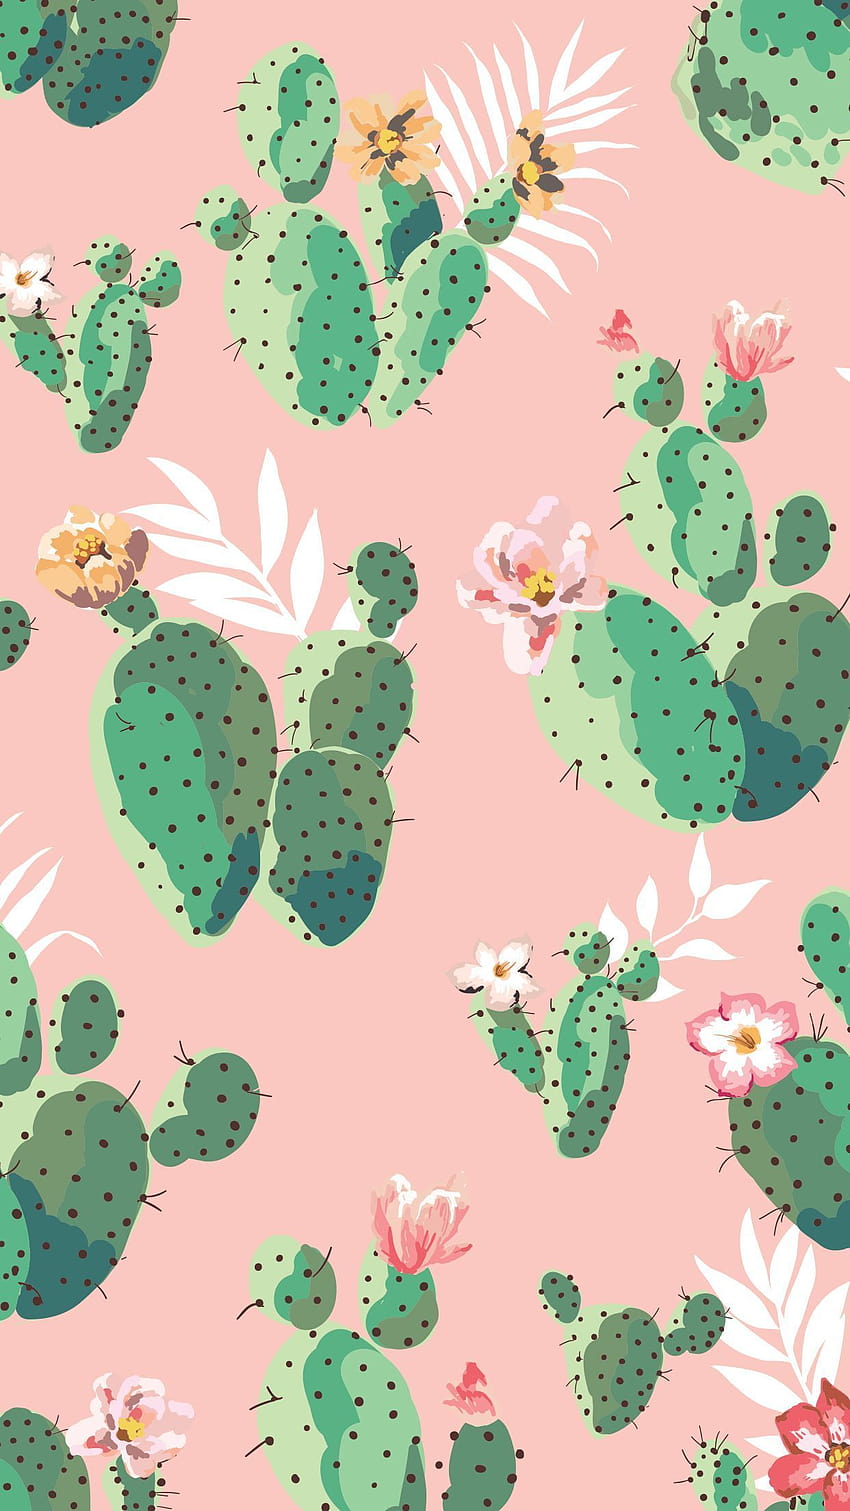 Cactus Mobile Wallpaper Images Free Download on Lovepik  400611042